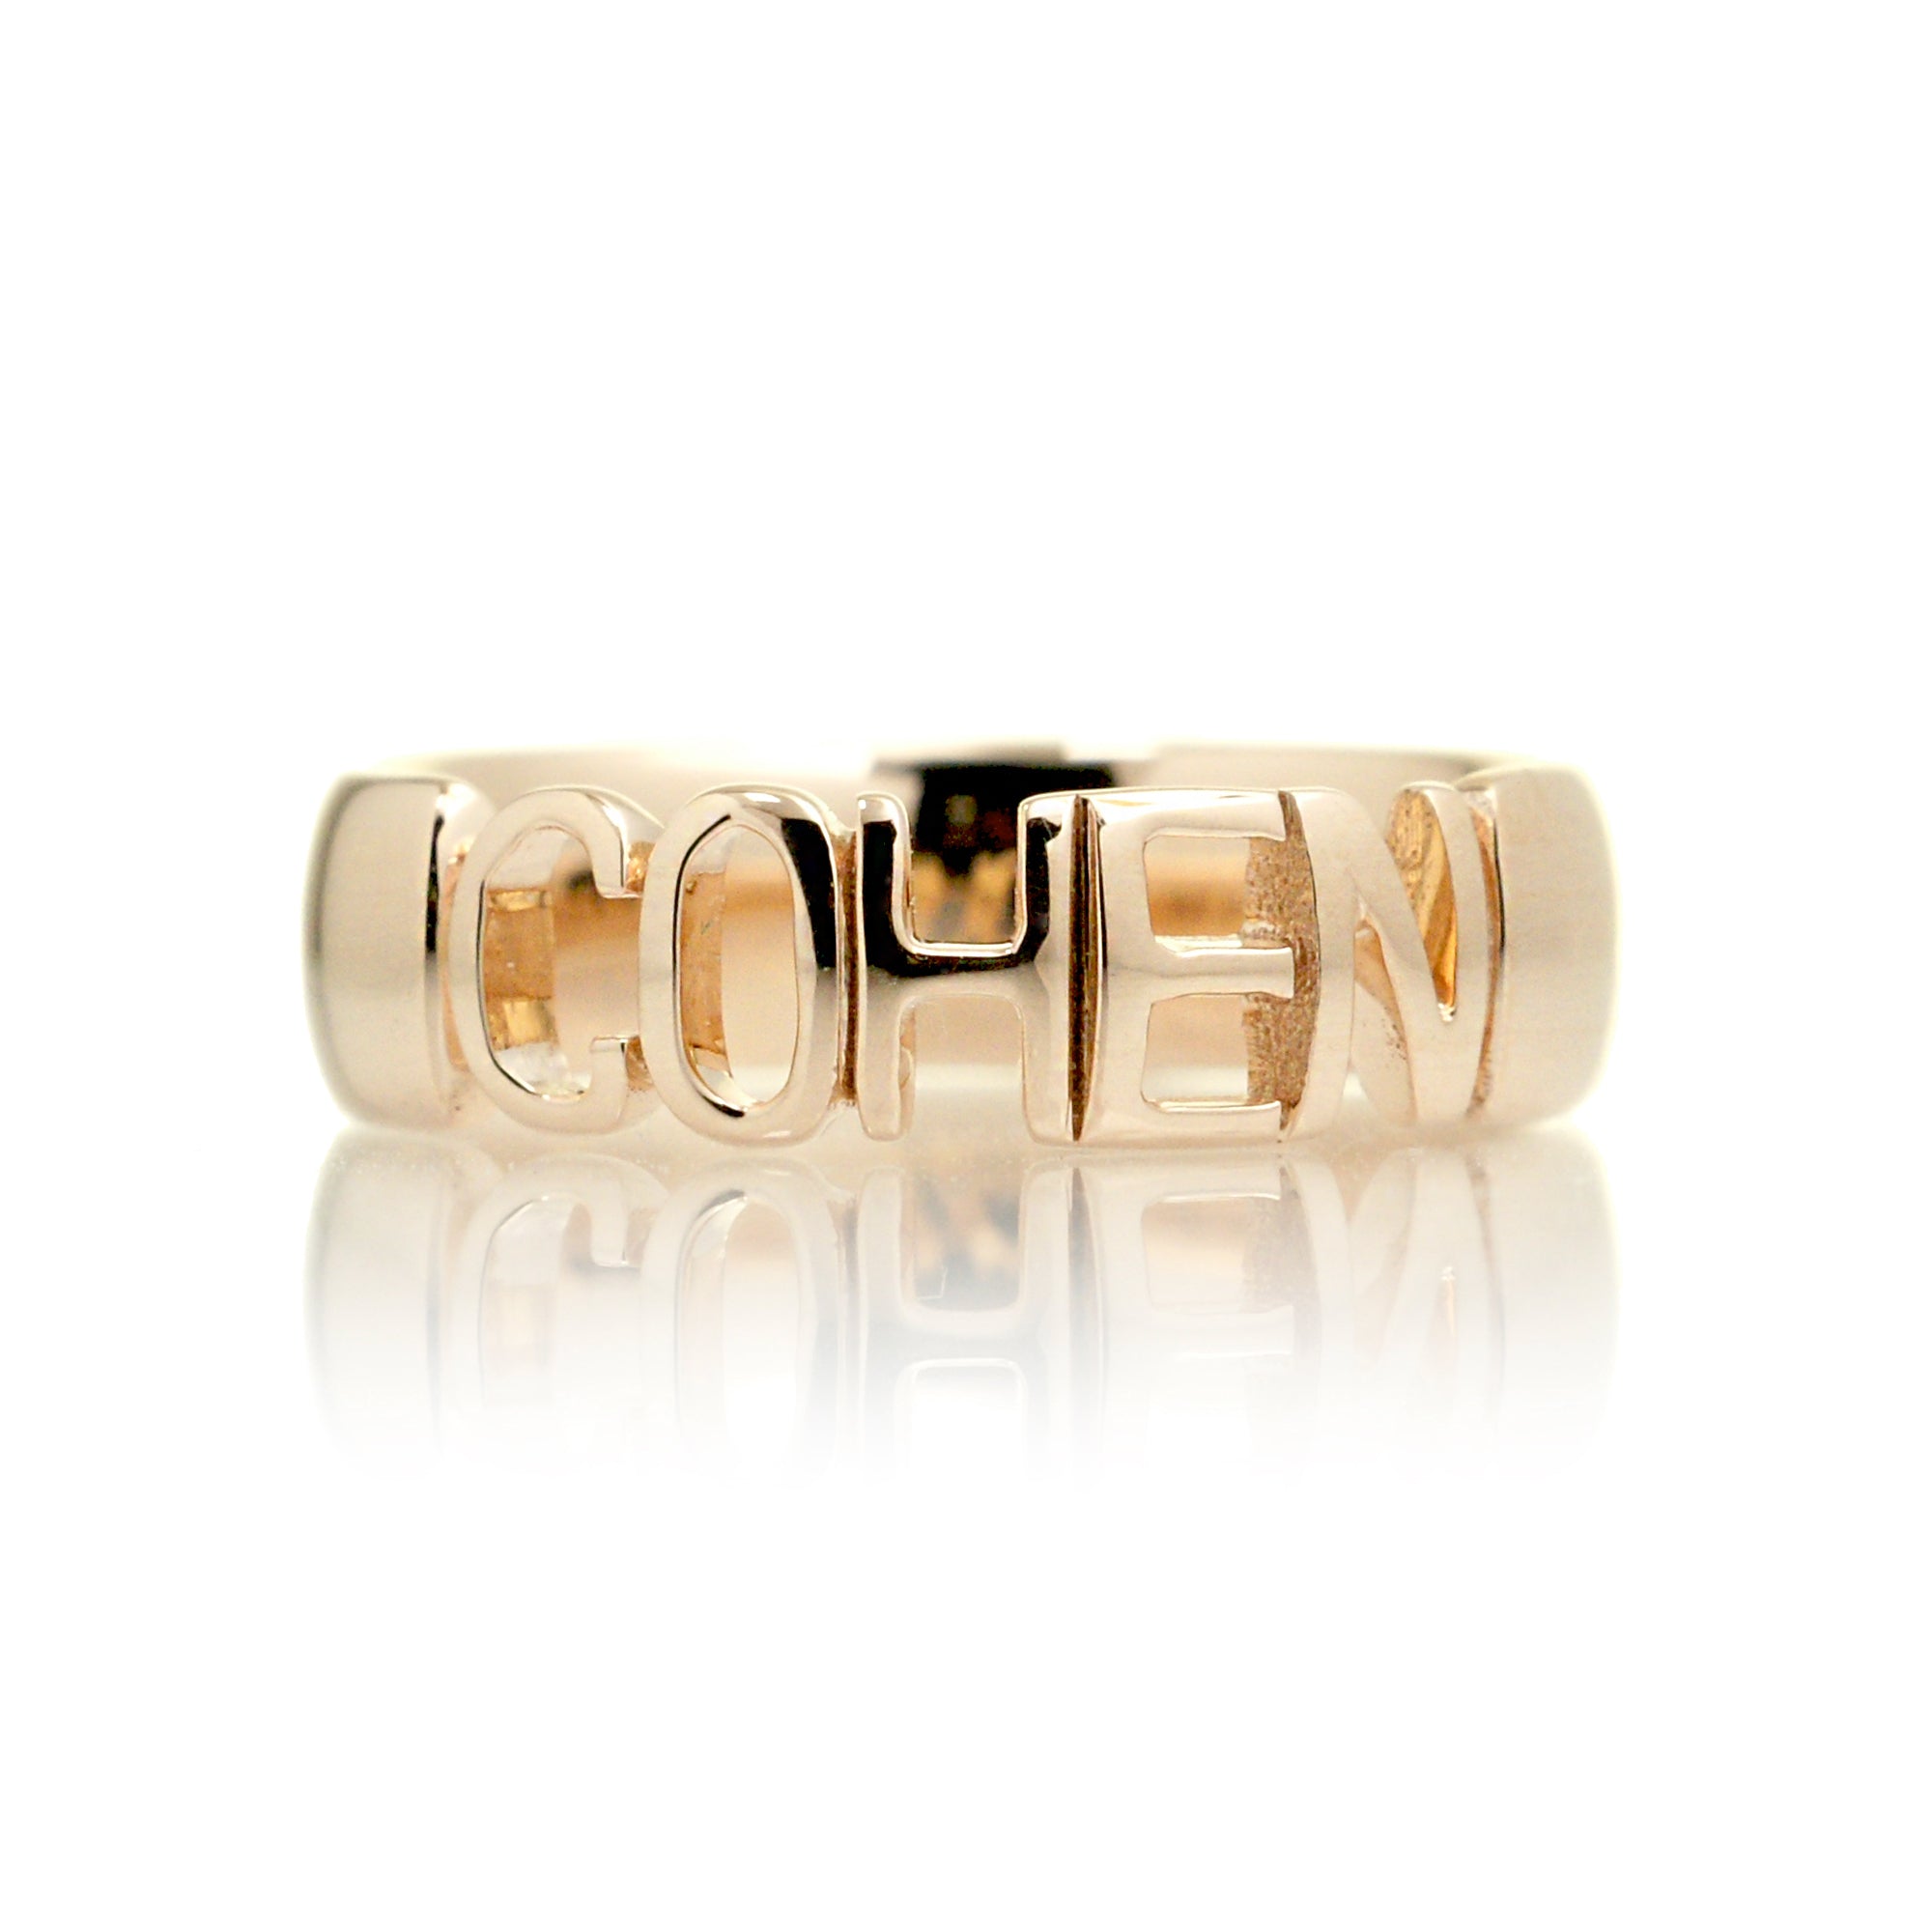 Namesake ring customize name on a band Cohen yellow gold